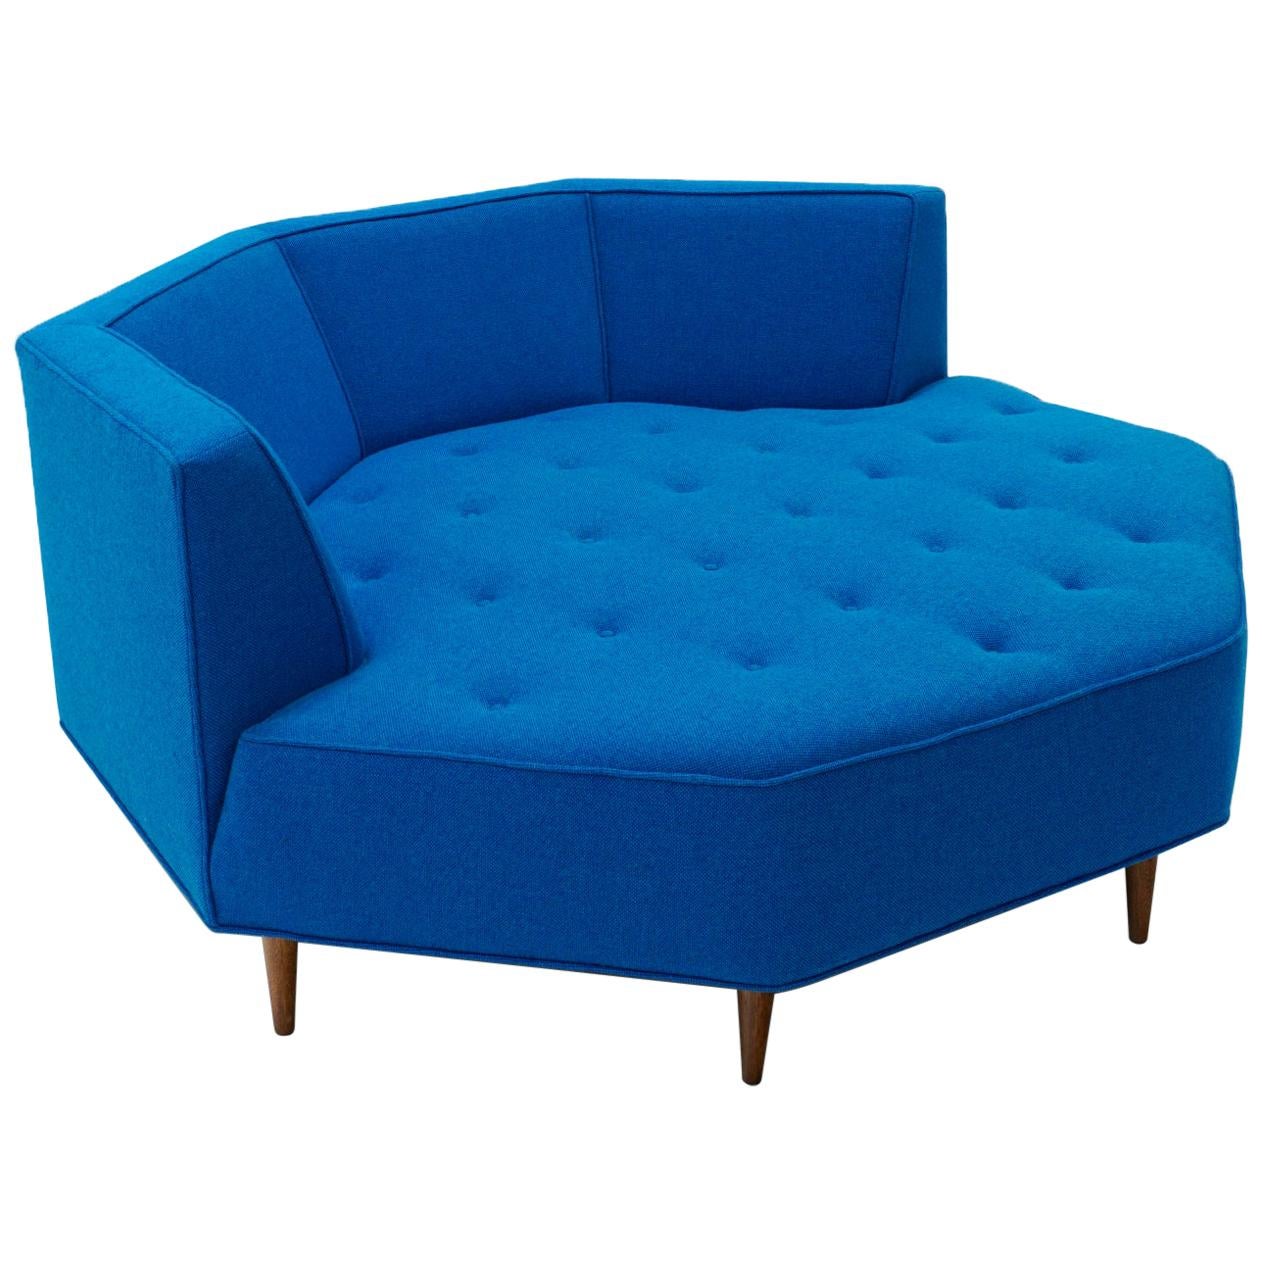 Octagonal Sofa Attributed to Harvey Probber, Restored in Blue Maharam Fabric